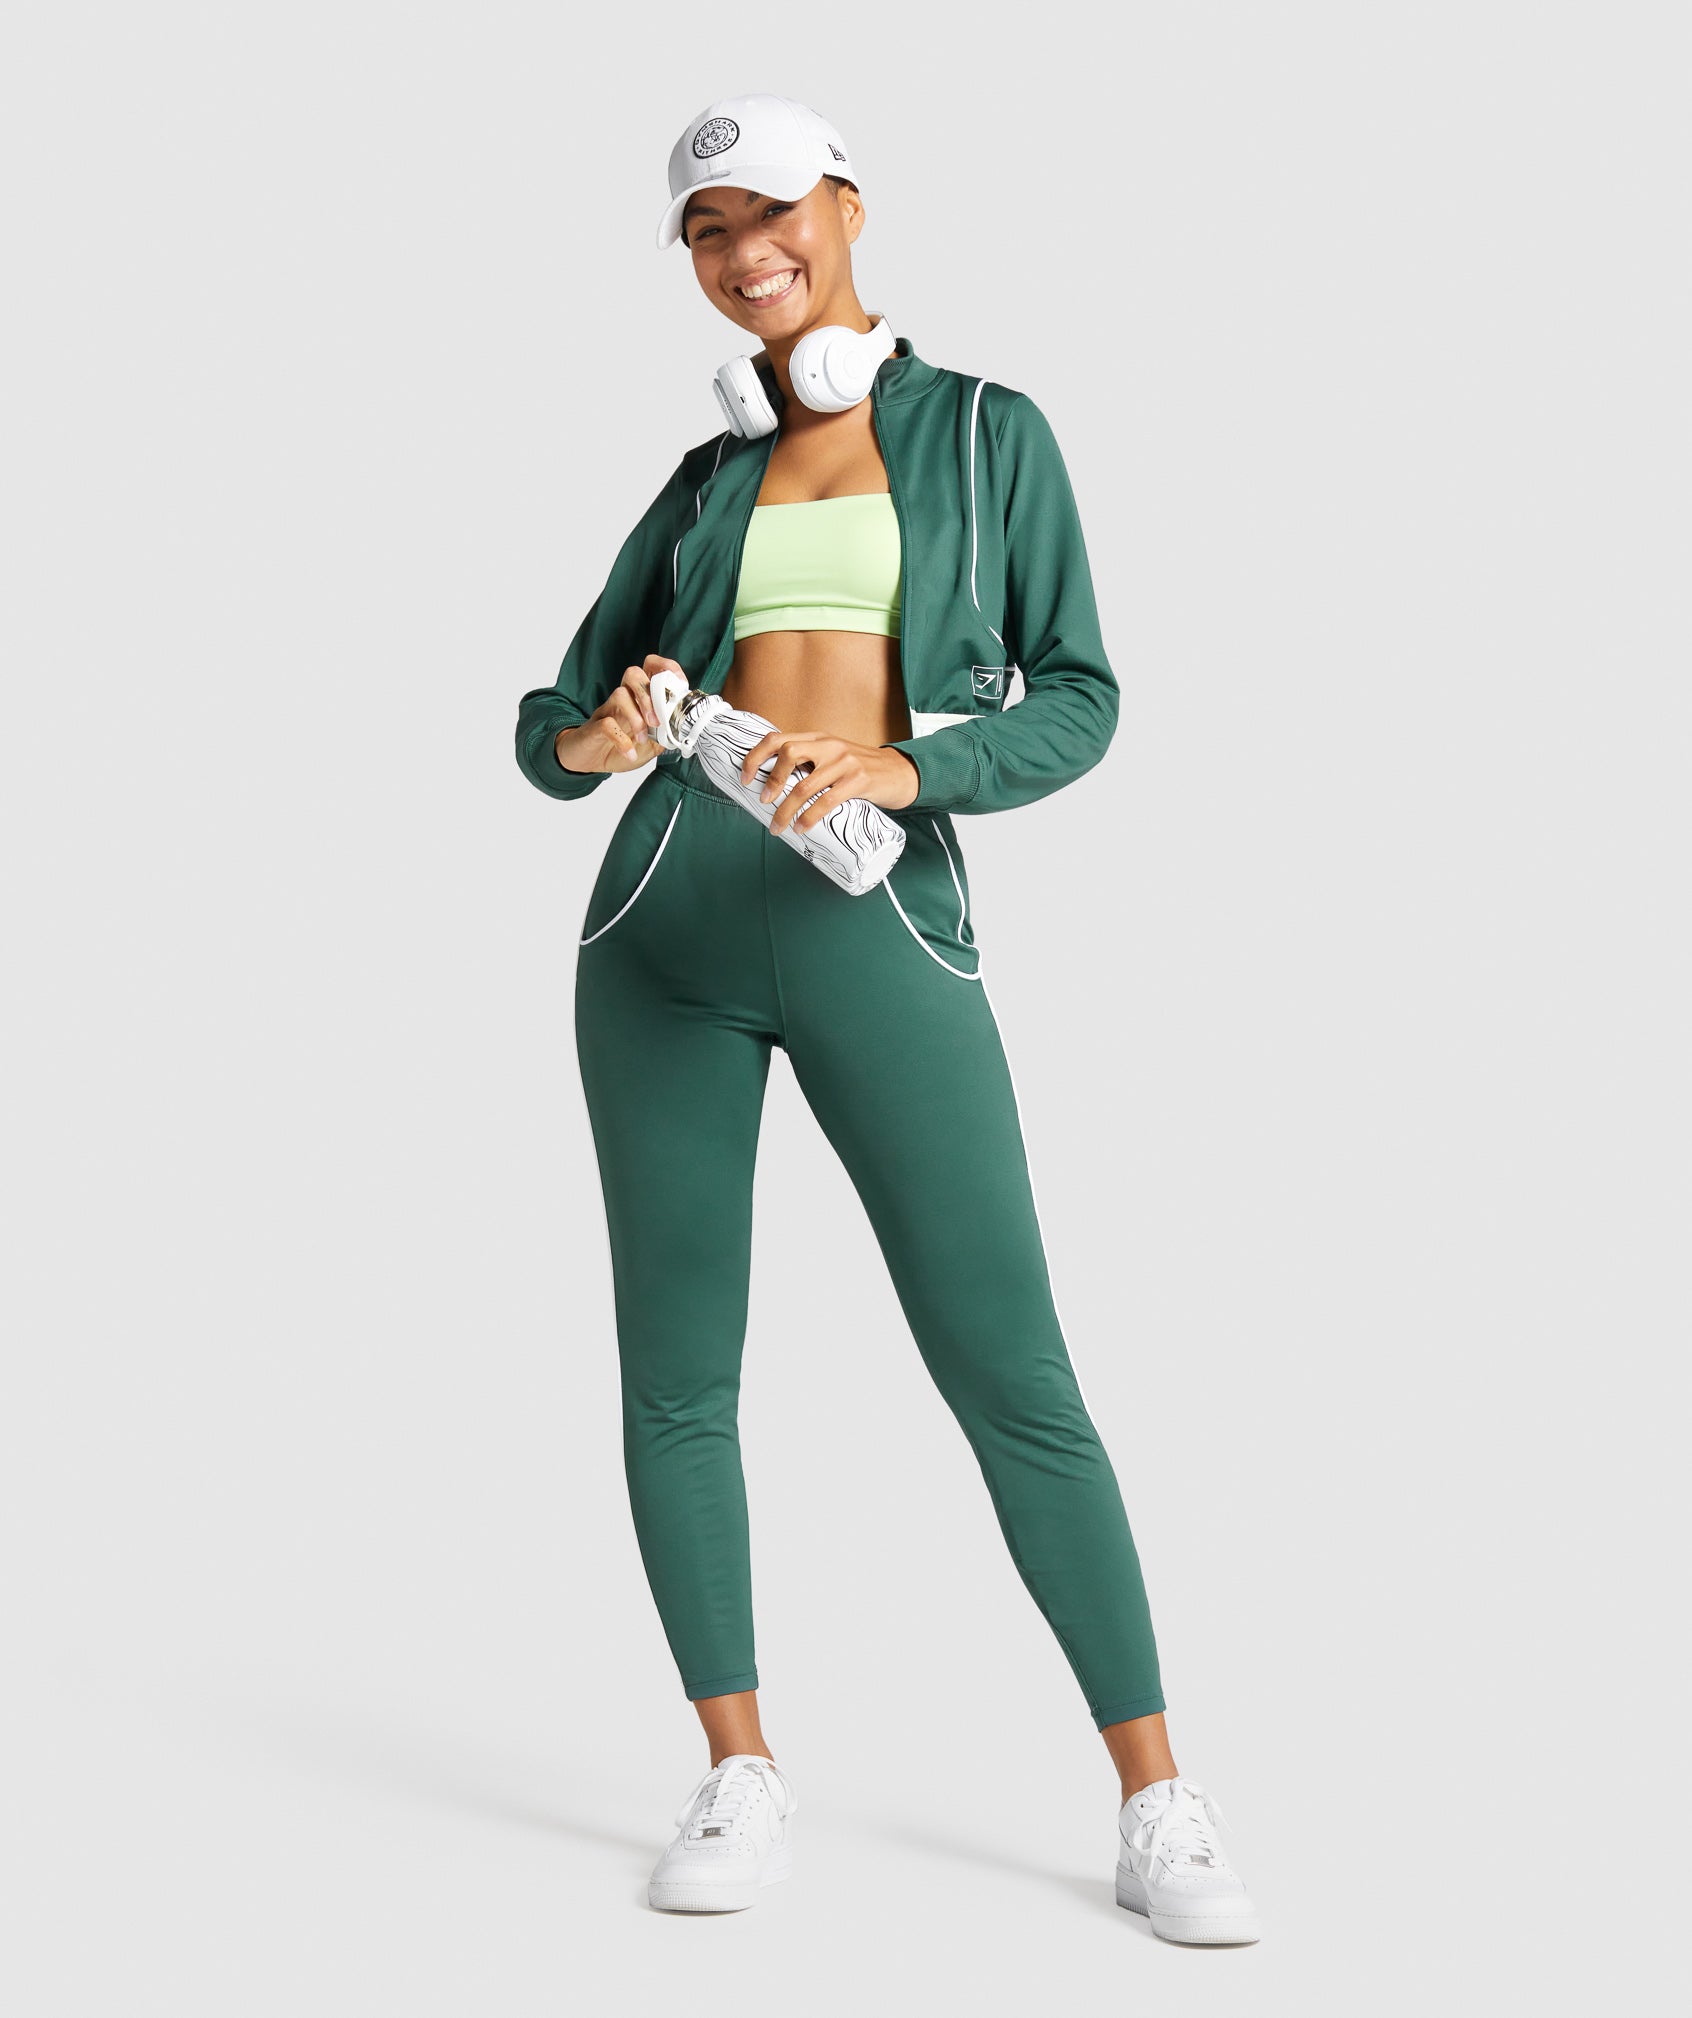 Gymshark Recess Joggers (S) - 'Light Green' Green - $36 (40% Off Retail) -  From Aimee